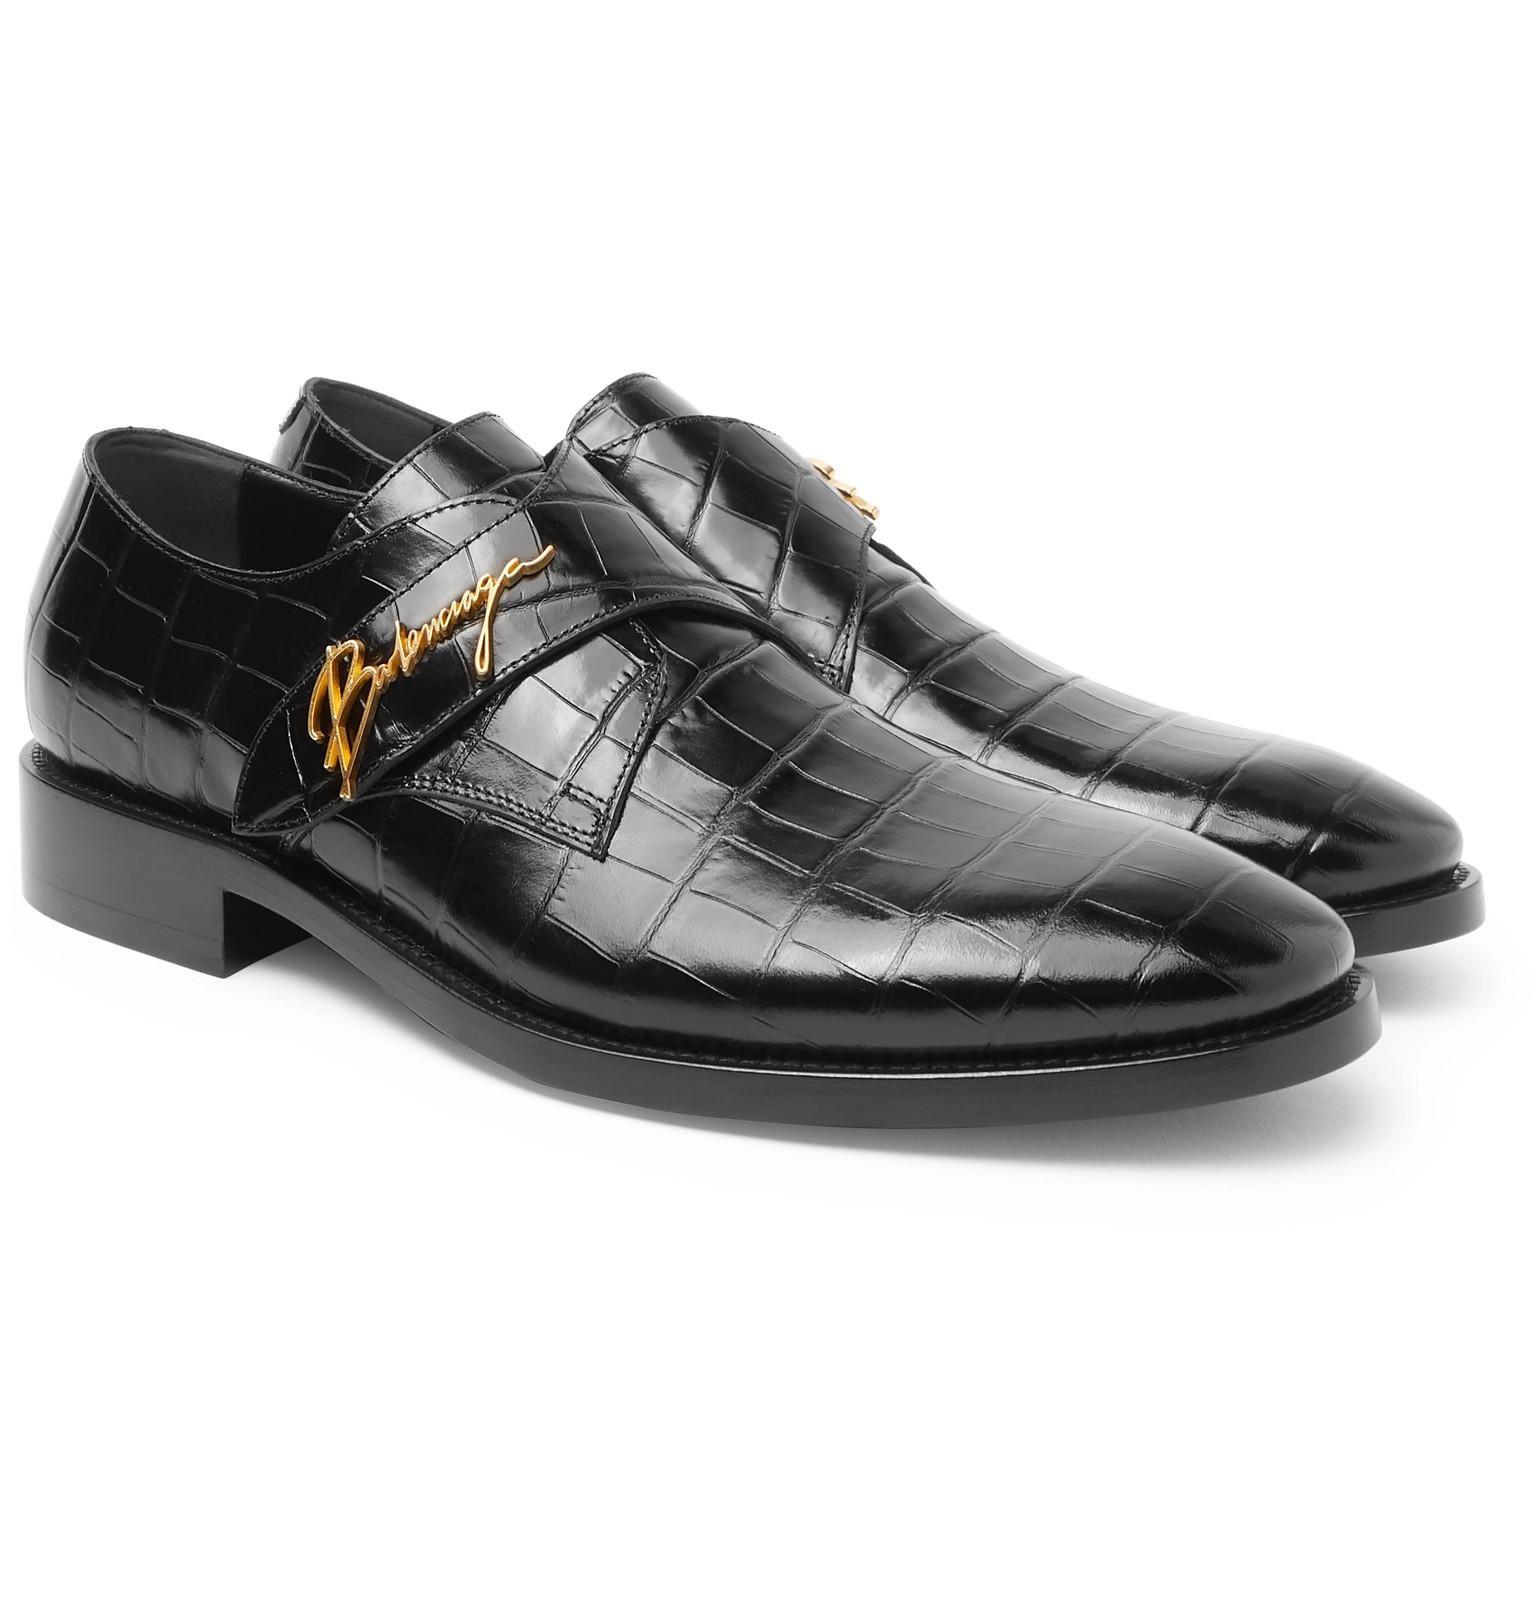 Crocodile Shoe Logo - Lyst - Balenciaga Croc-effect Leather Shoes in Black for Men